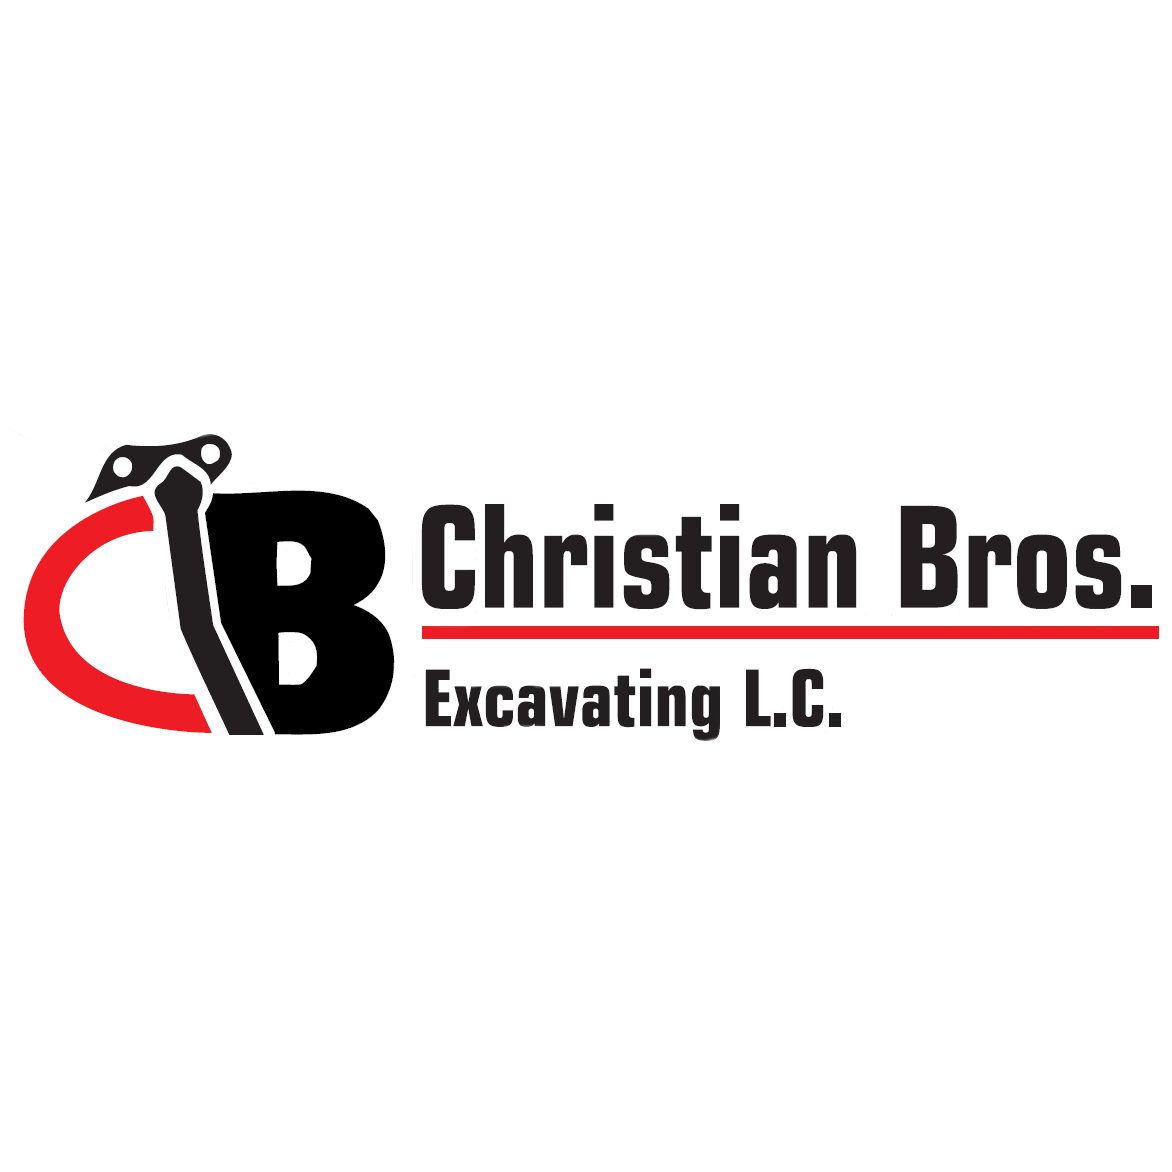 Christian Bros. Excavating L.C. - Sioux Rapids, IA 50585 - (712)283-2496 | ShowMeLocal.com